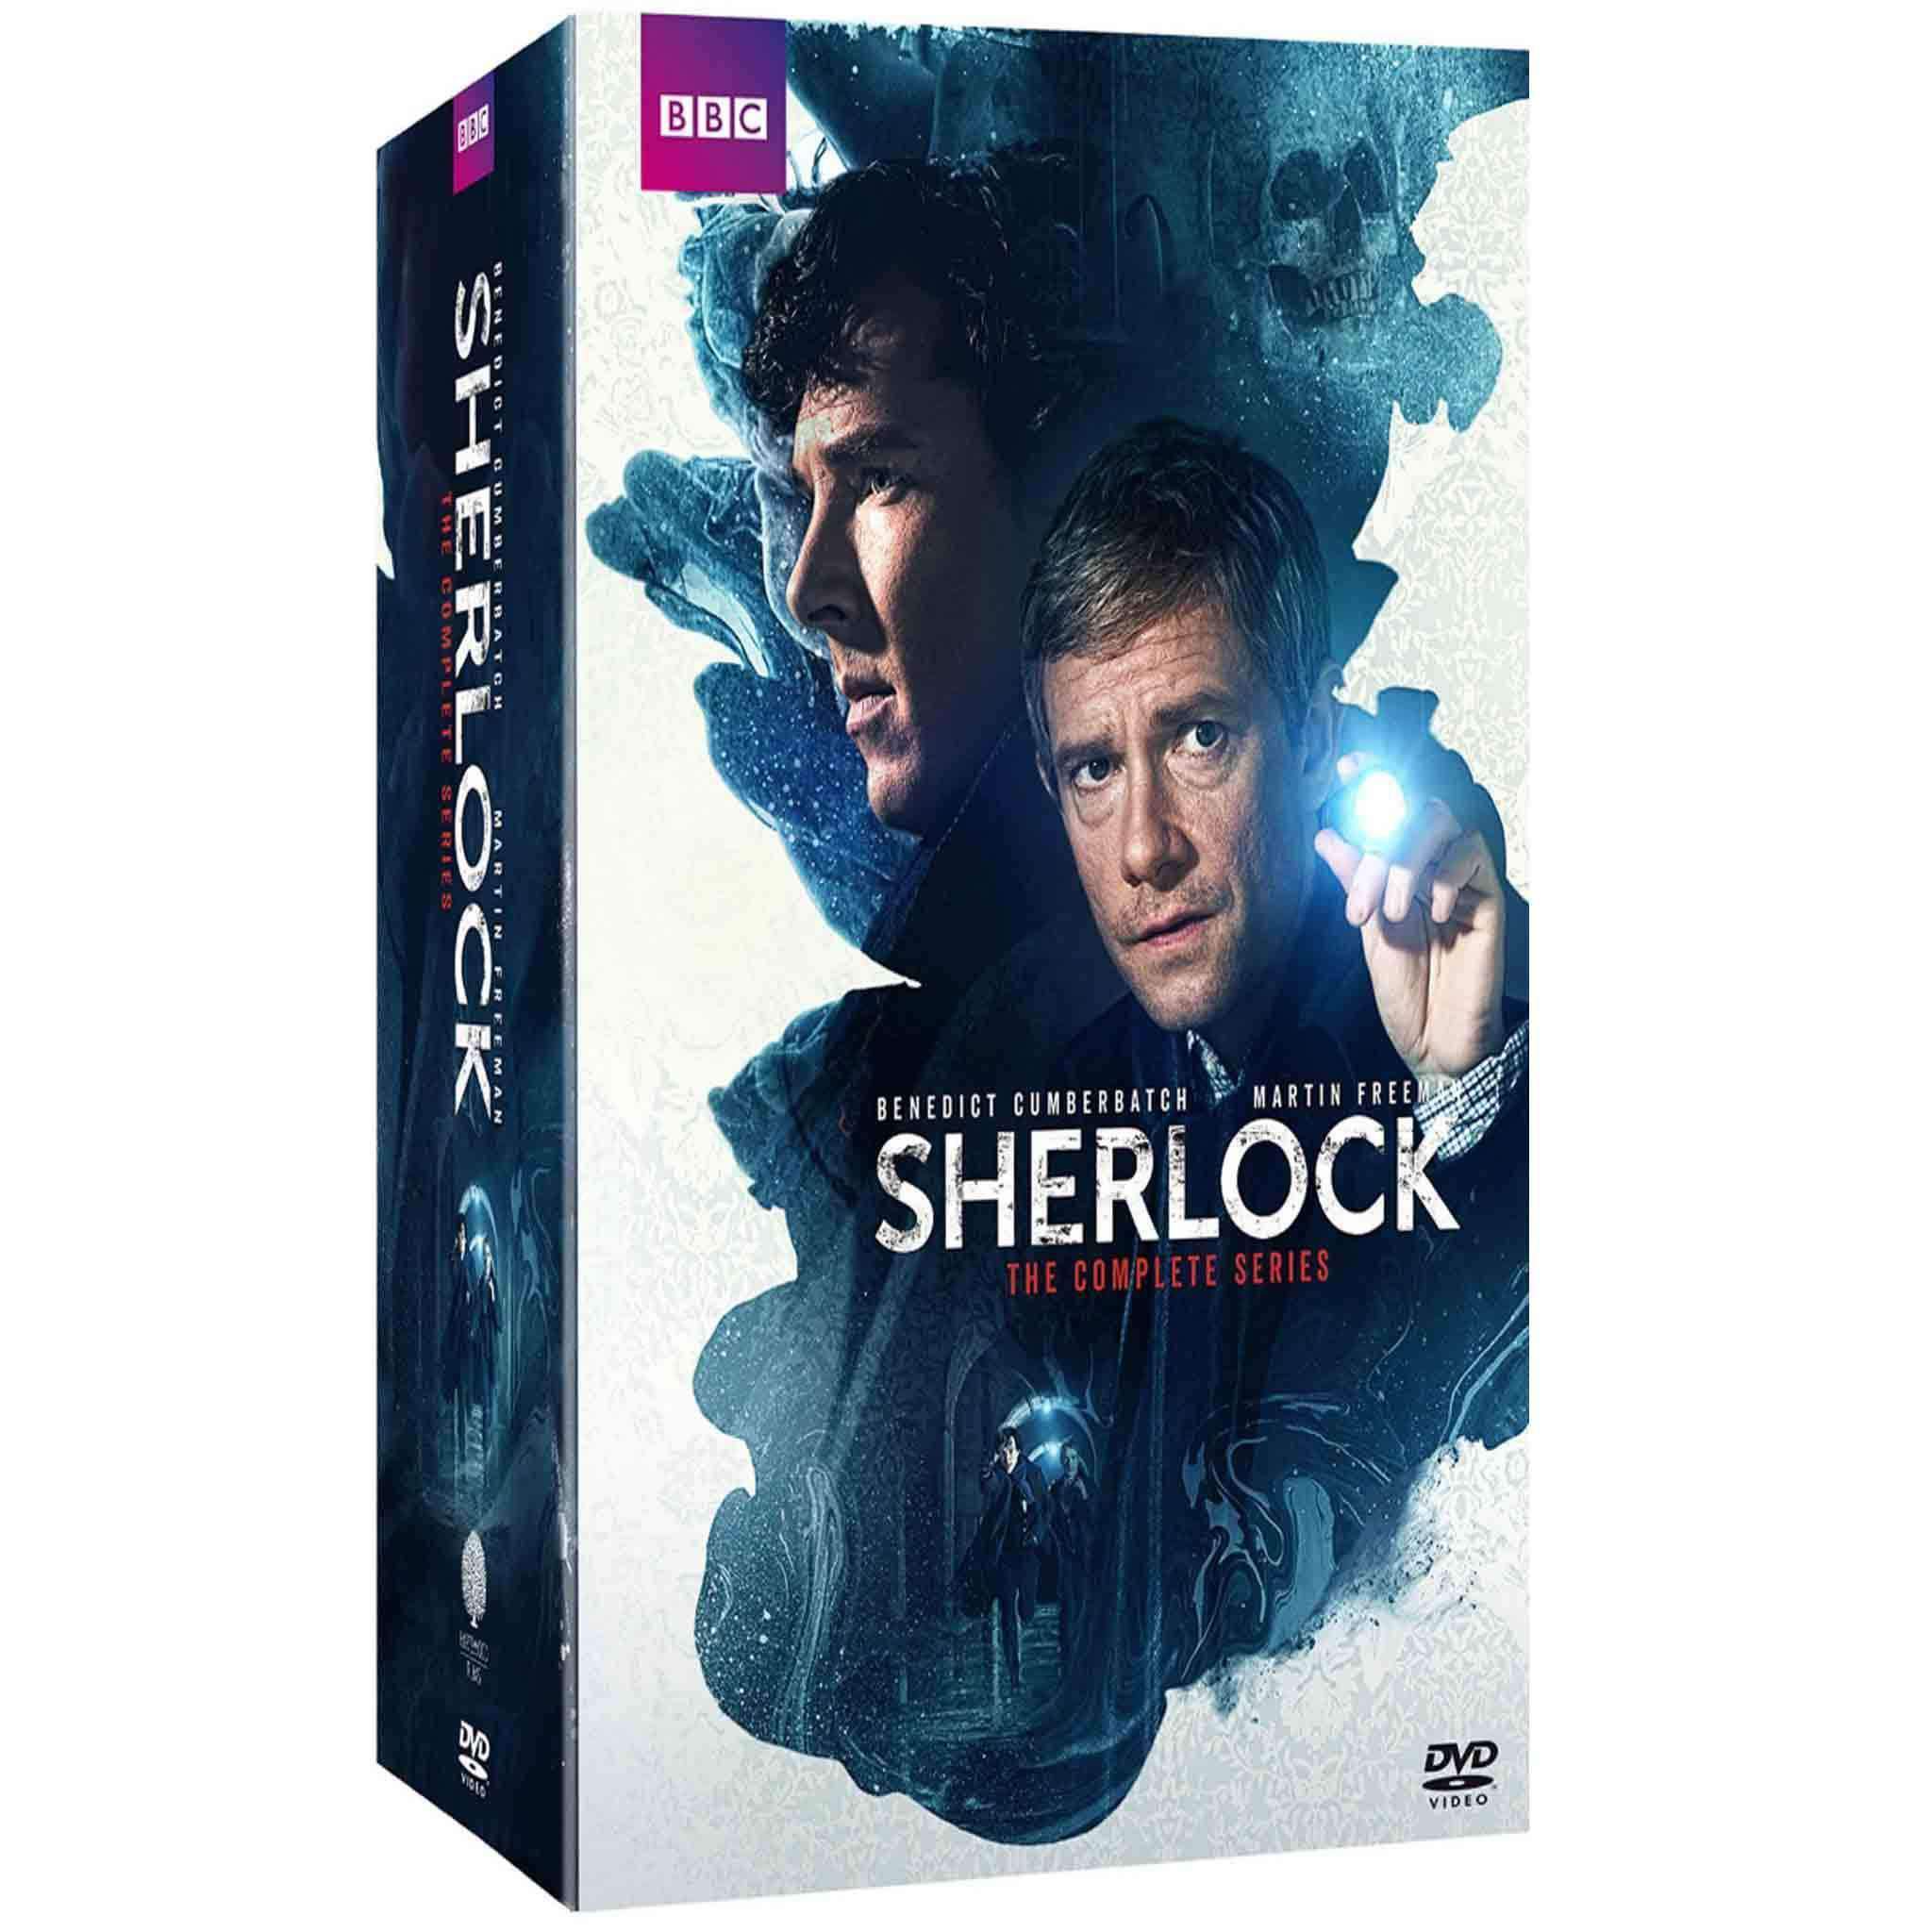 Sherlock DVD Complete Series Box Set BBC America DVDs & Blu-ray Discs > DVDs > Box Sets